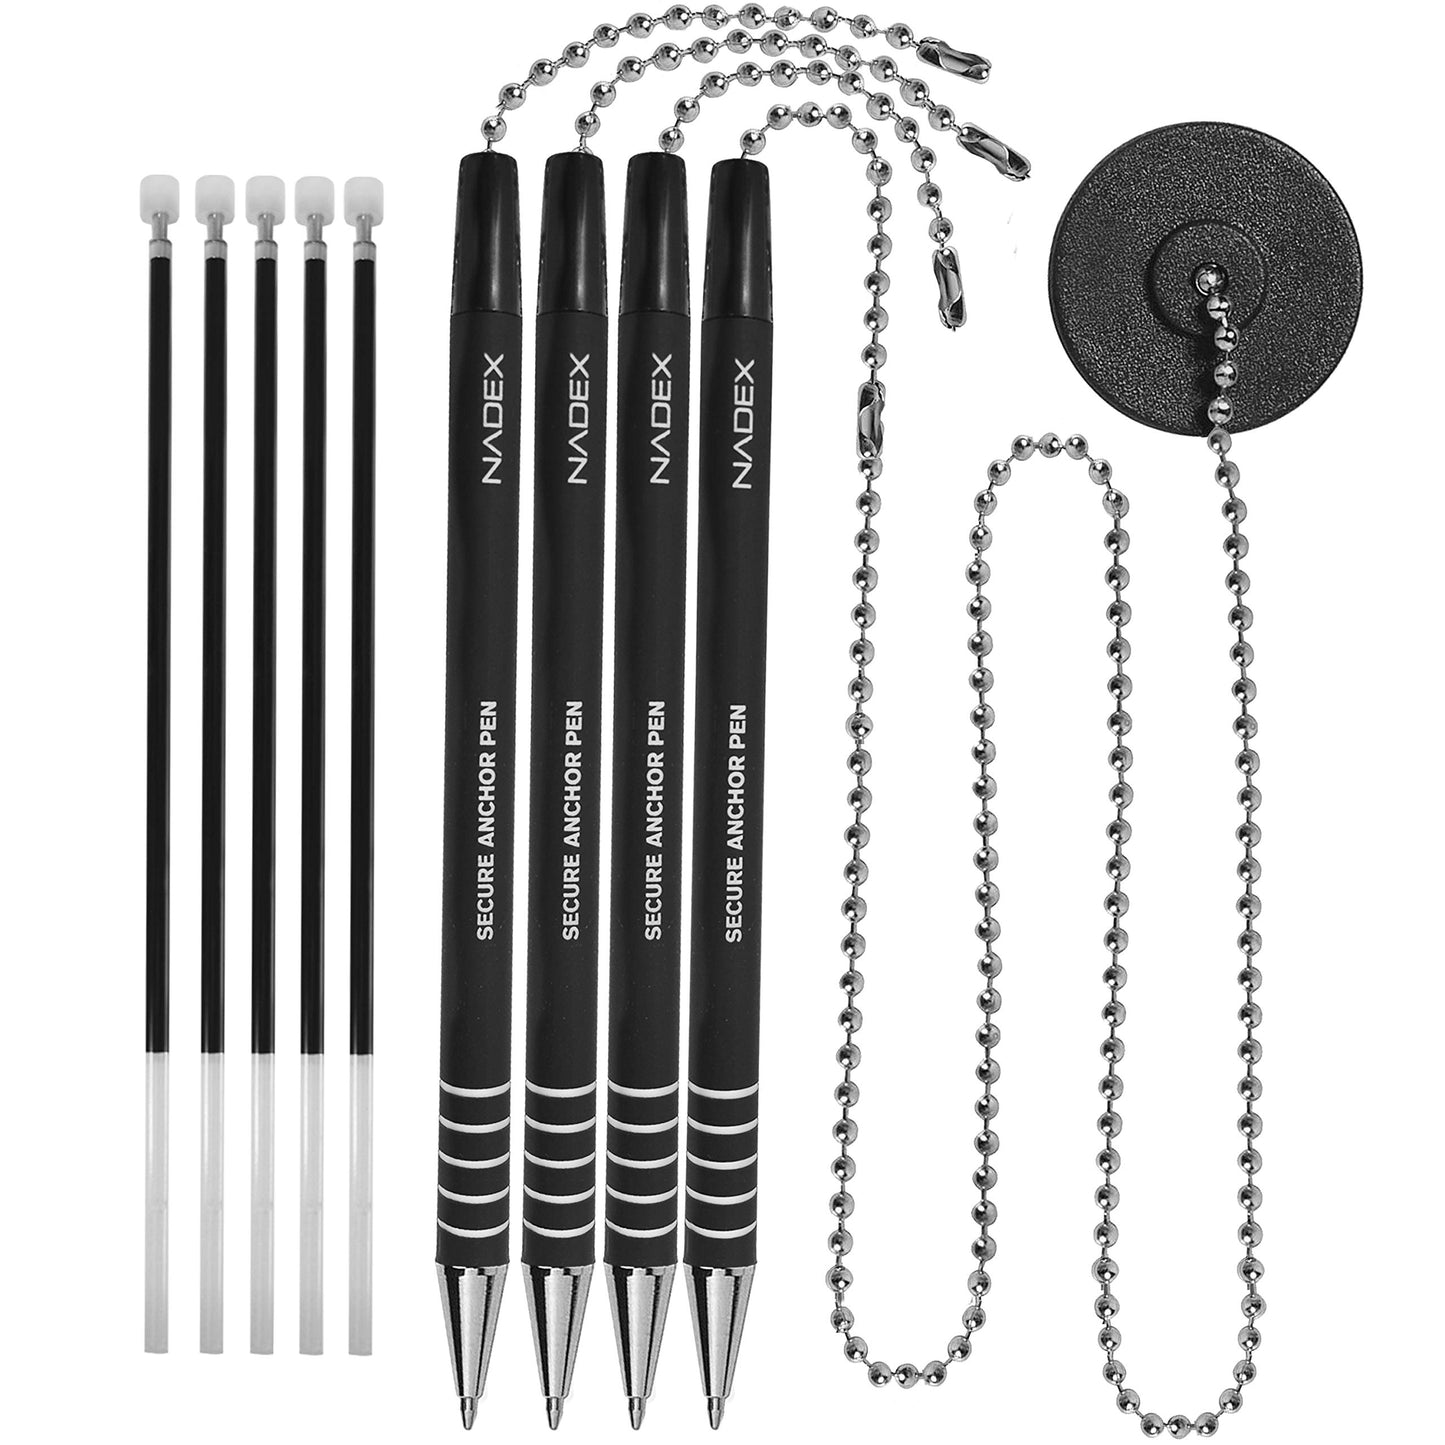 Security Chain Security Pen, 4 Pens, 1 Base, 5 refills, black